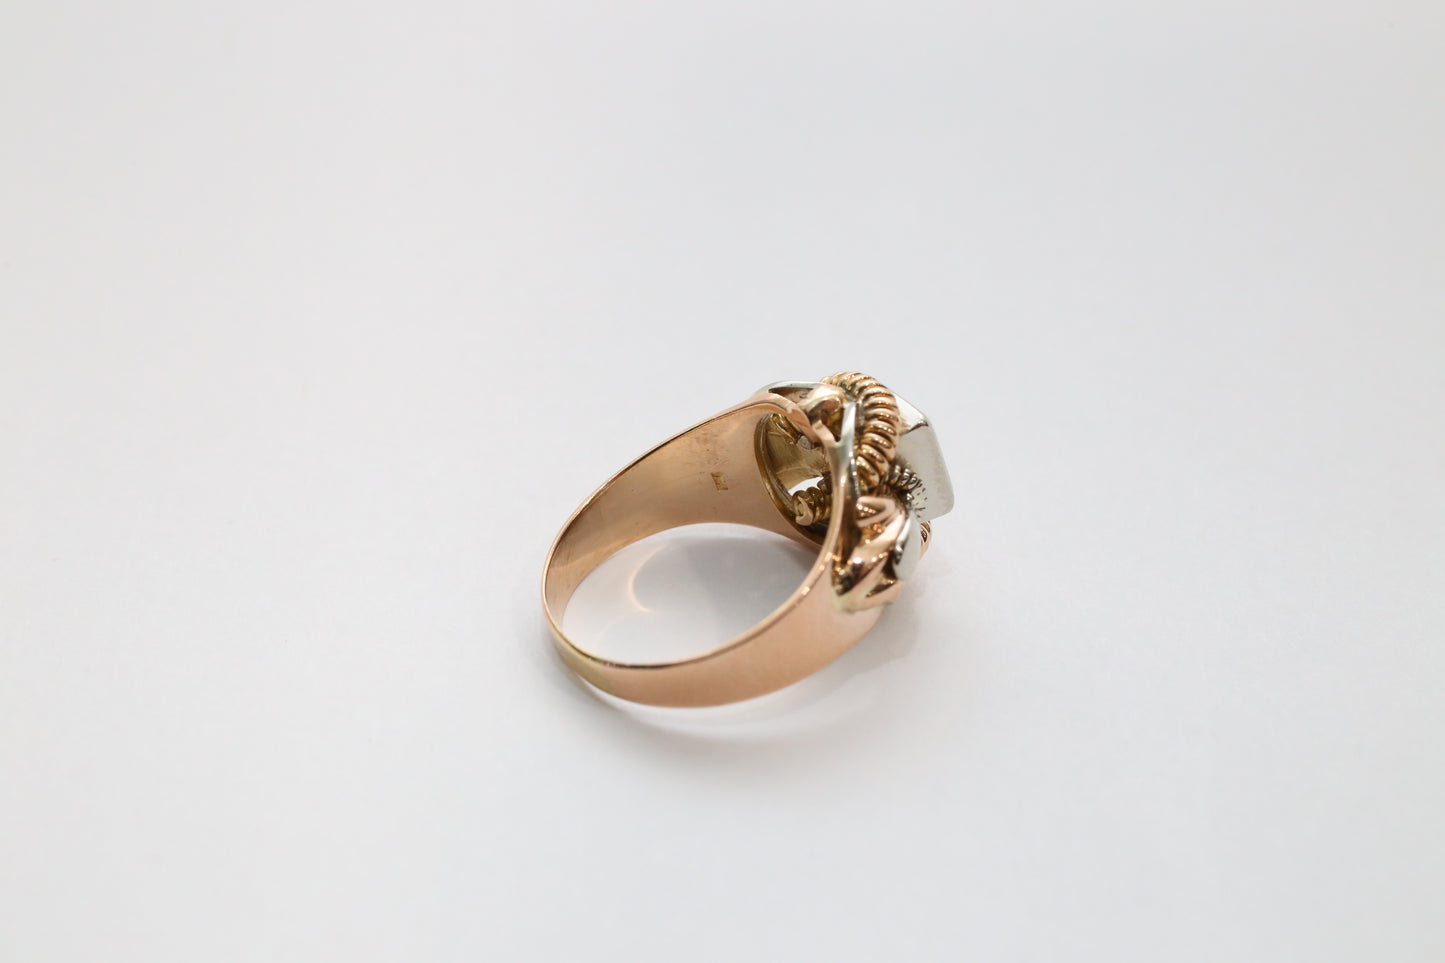 18k Tri-Gold Diamond Ring, Size 8.25 - 7.9g